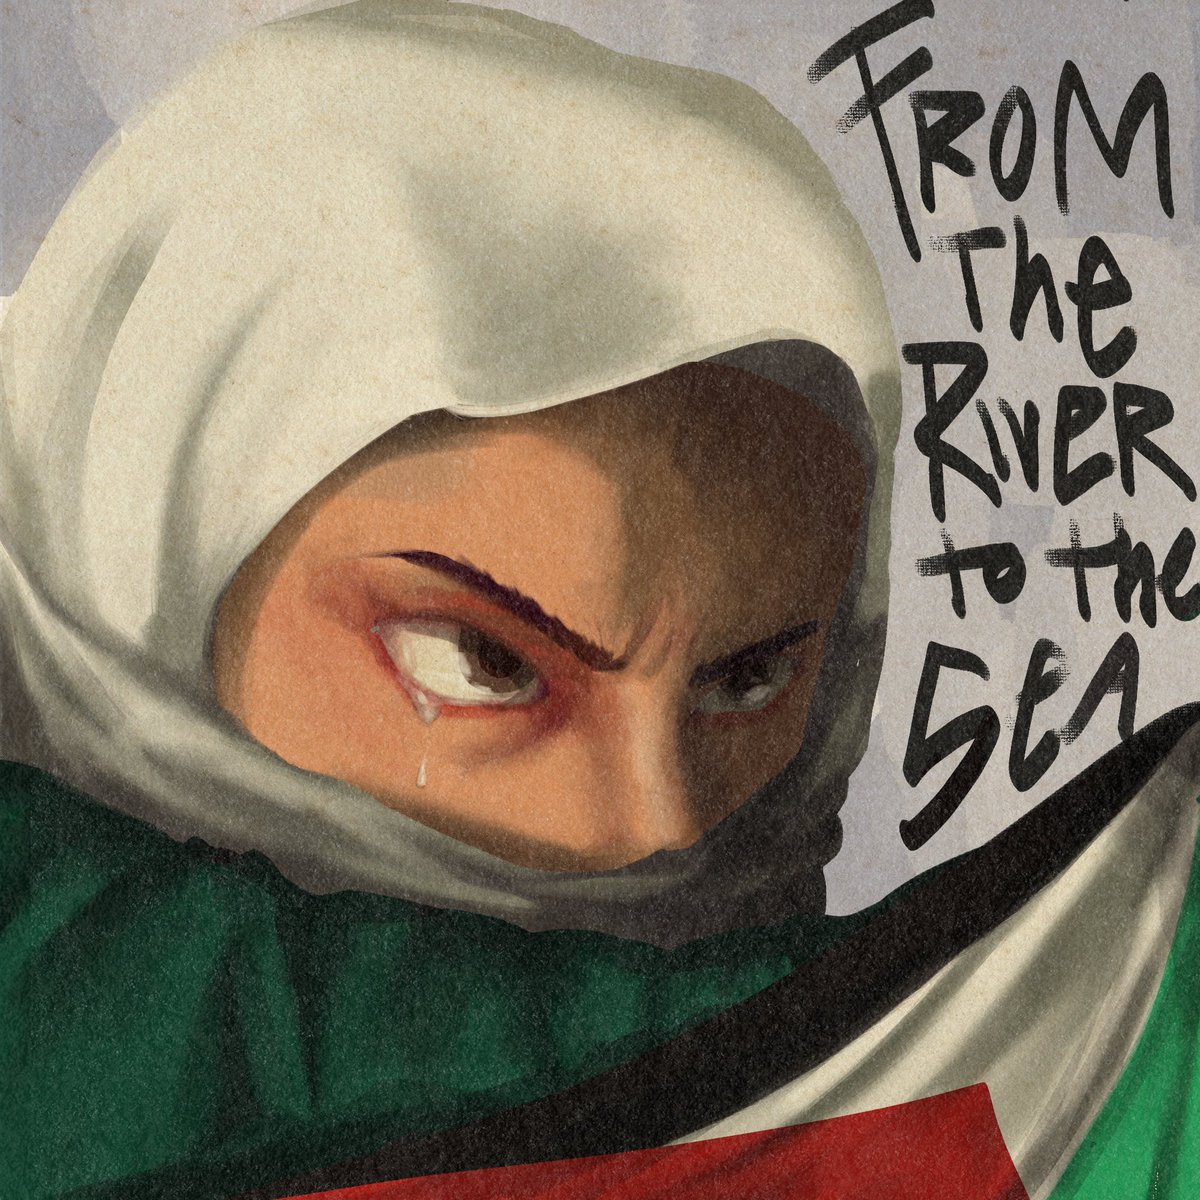 「PALESTINE WILL BE FREE #CeasefireNOW #Ce」|nora girlemployee eraのイラスト